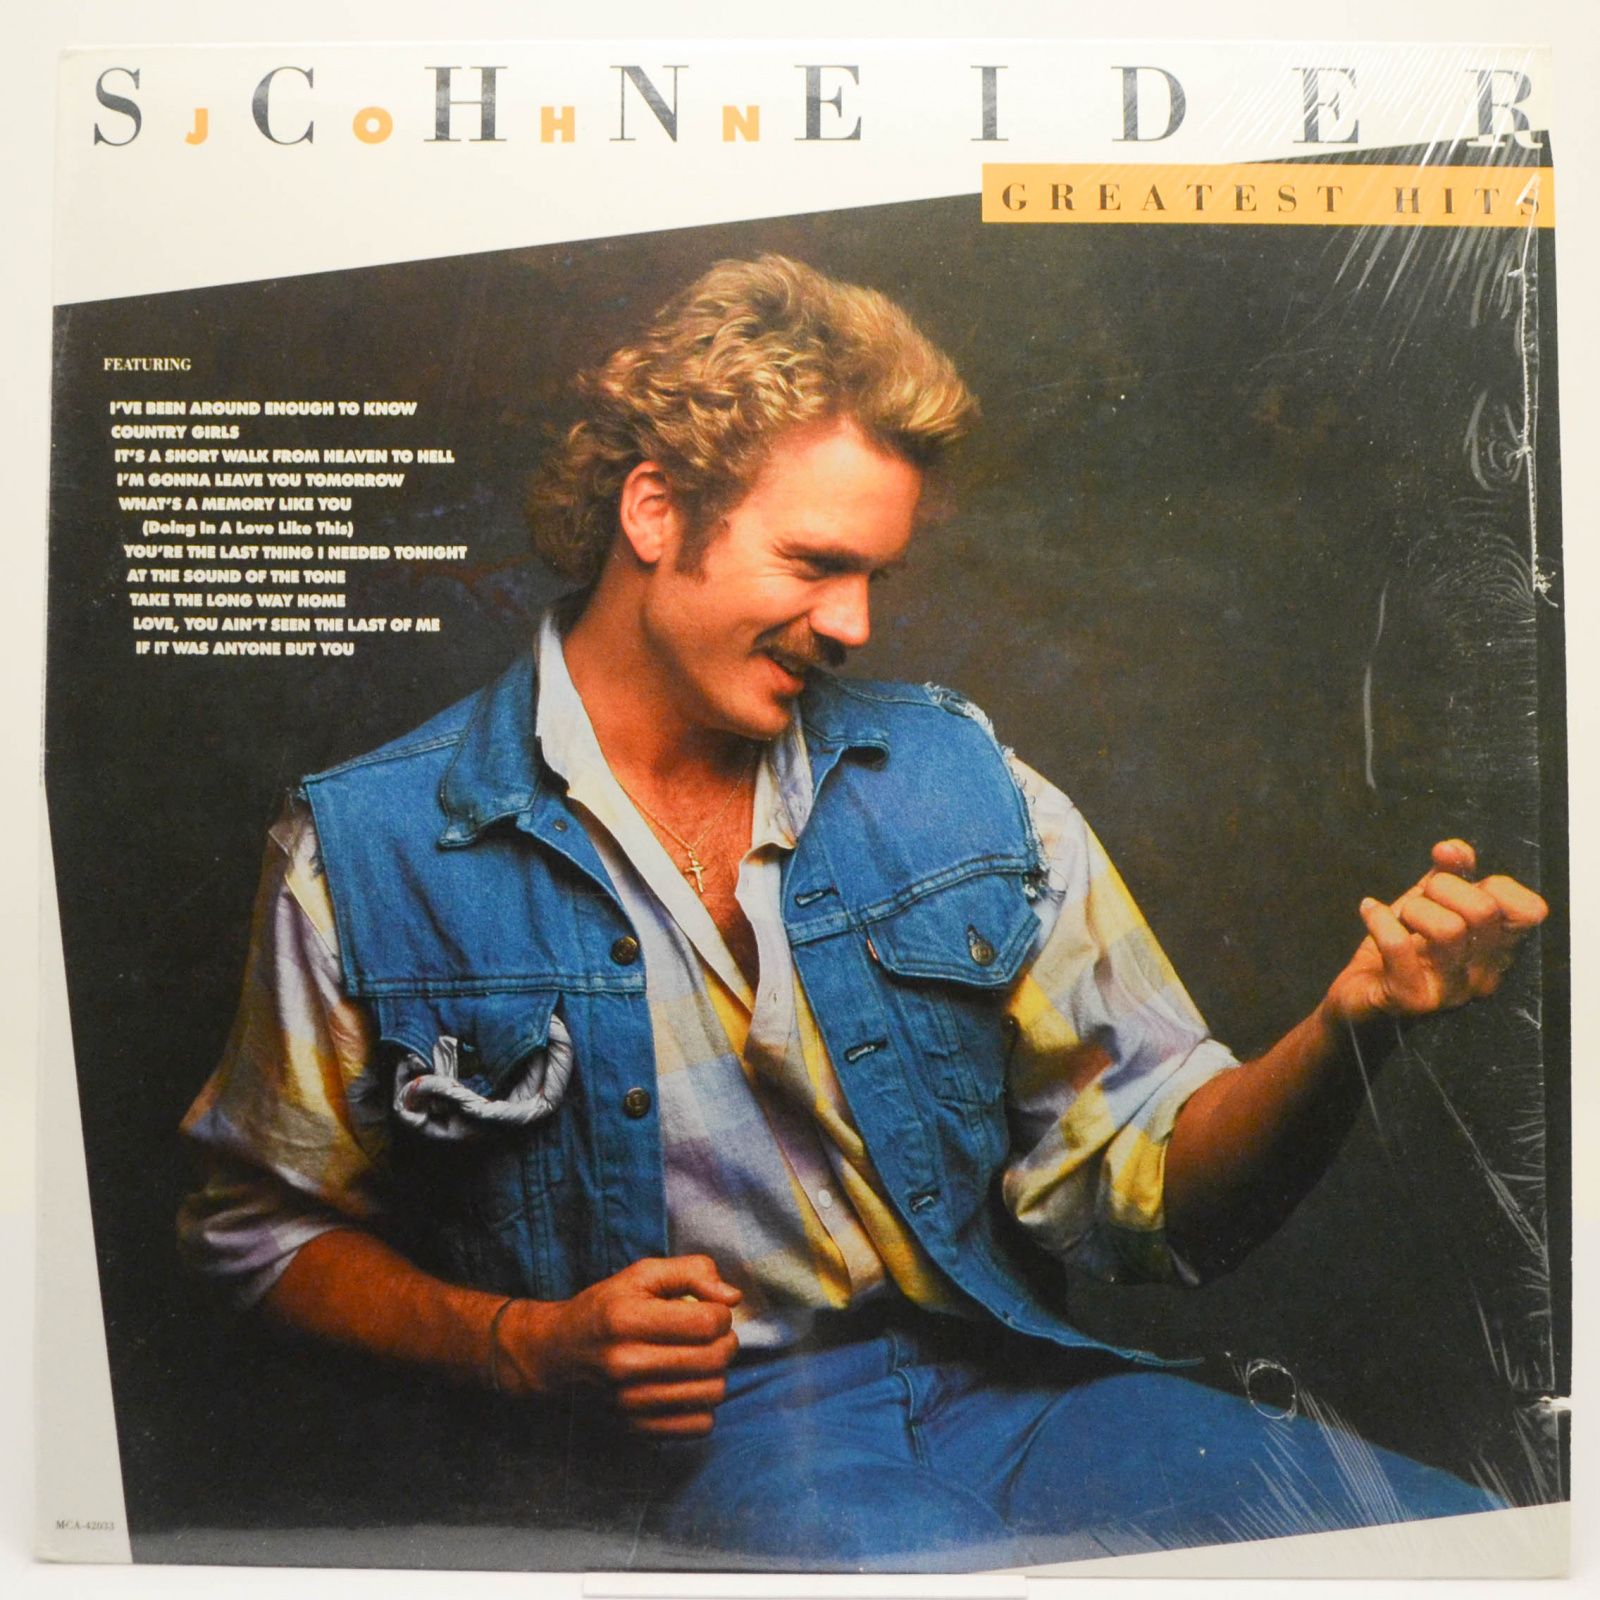 John Schneider — Greatest Hits, 1987